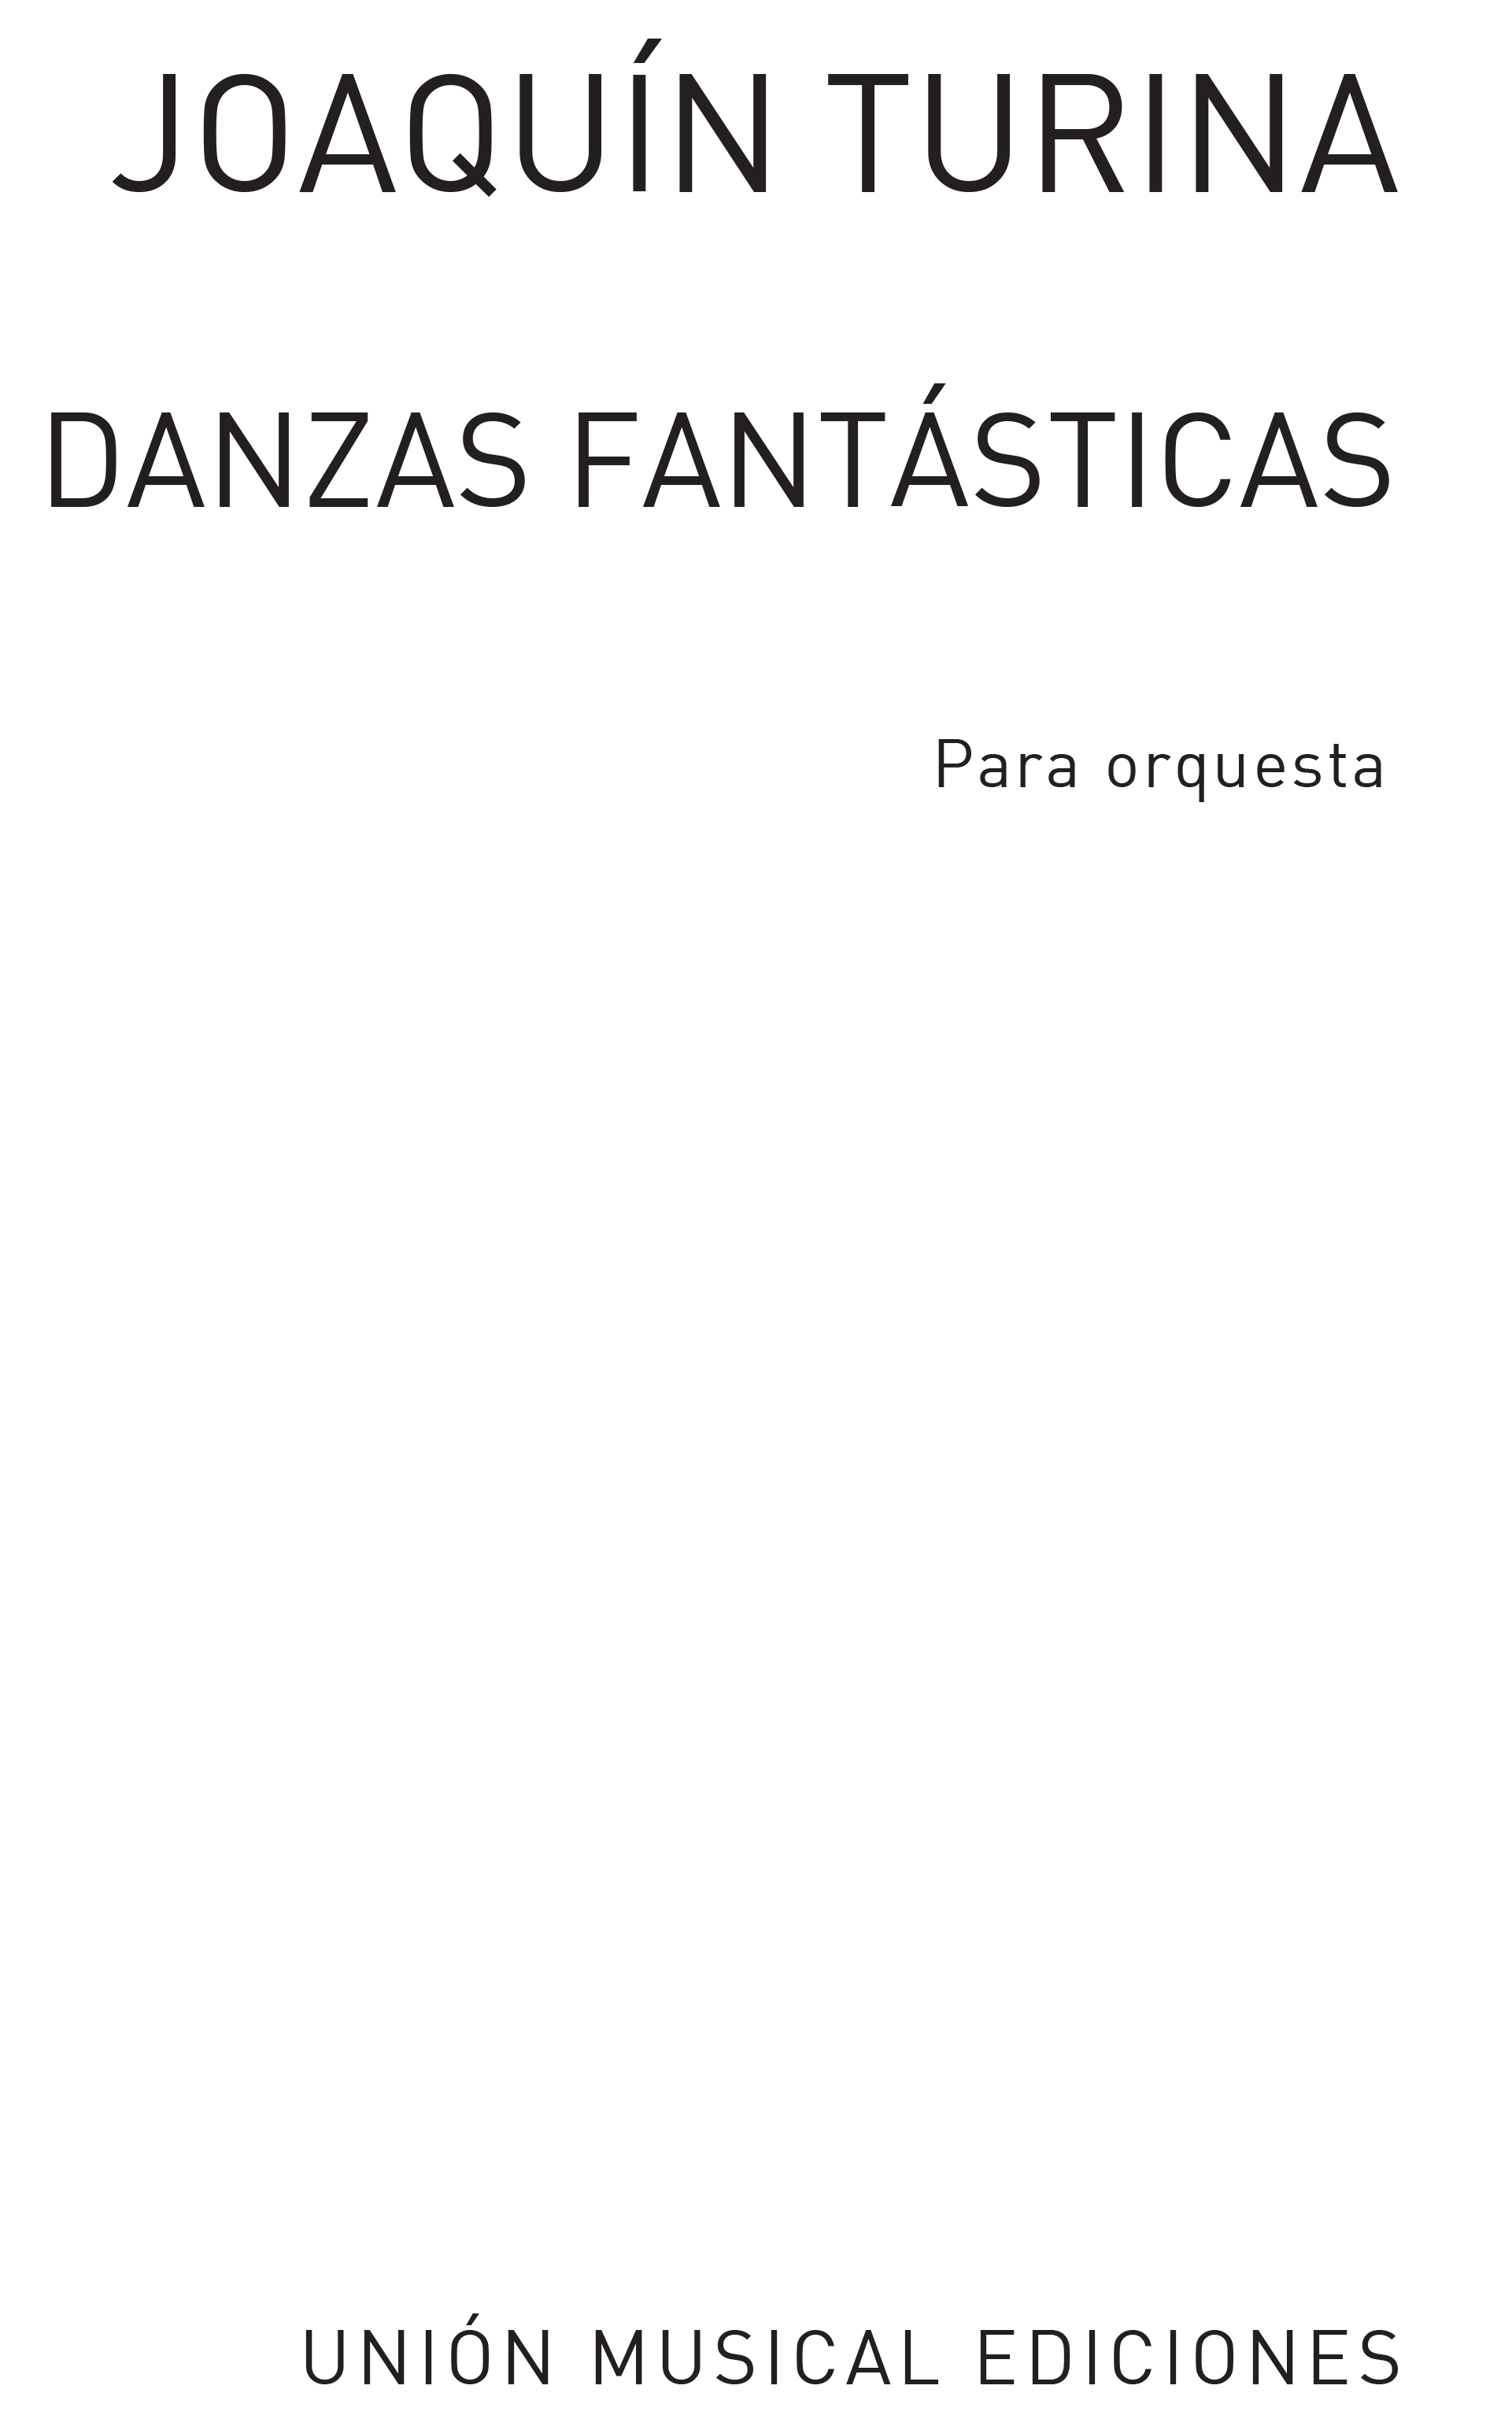 Joaquín Turina: Danzas Fantasticas: Orchestra: Score